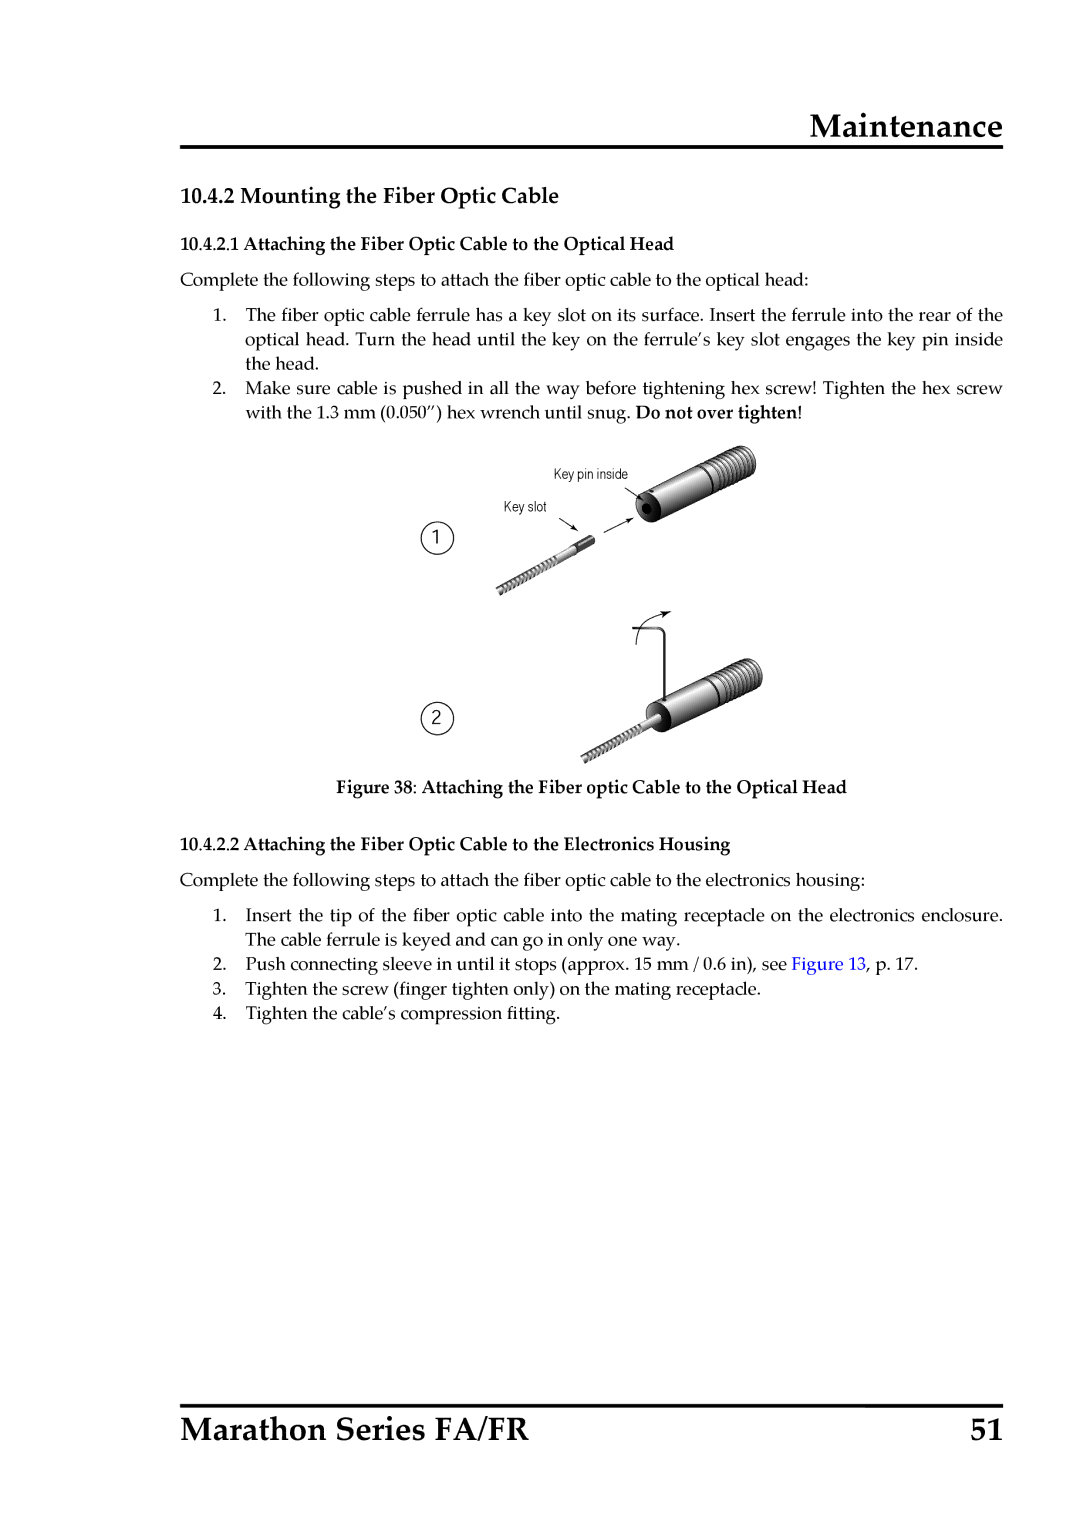 RayTek FA, FR operating instructions Mounting the Fiber Optic Cable, Attaching the Fiber Optic Cable to the Optical Head 